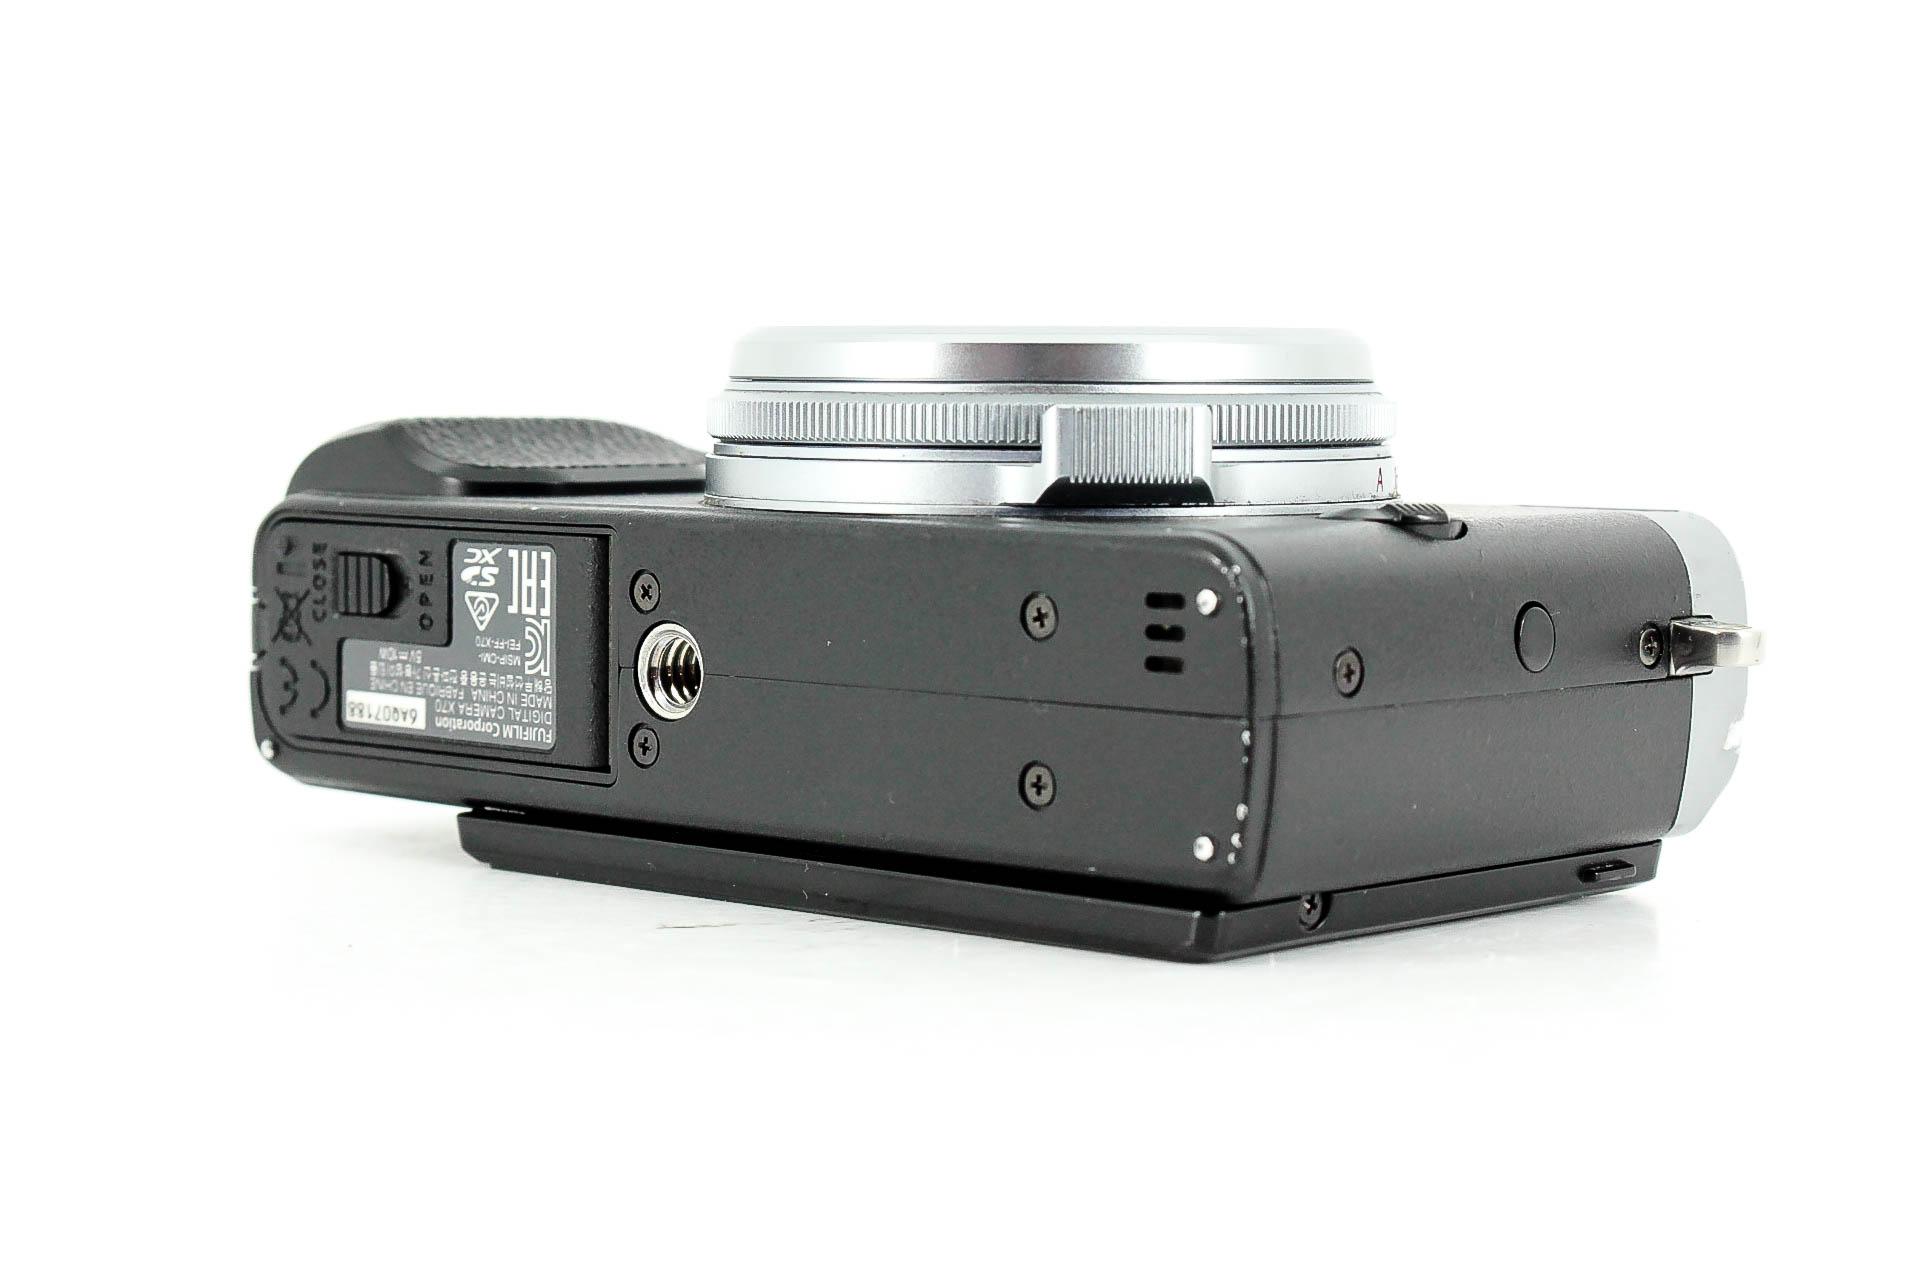 Fujifilm X70 16.3 MP Digital Camera Silver Lenses and Cameras